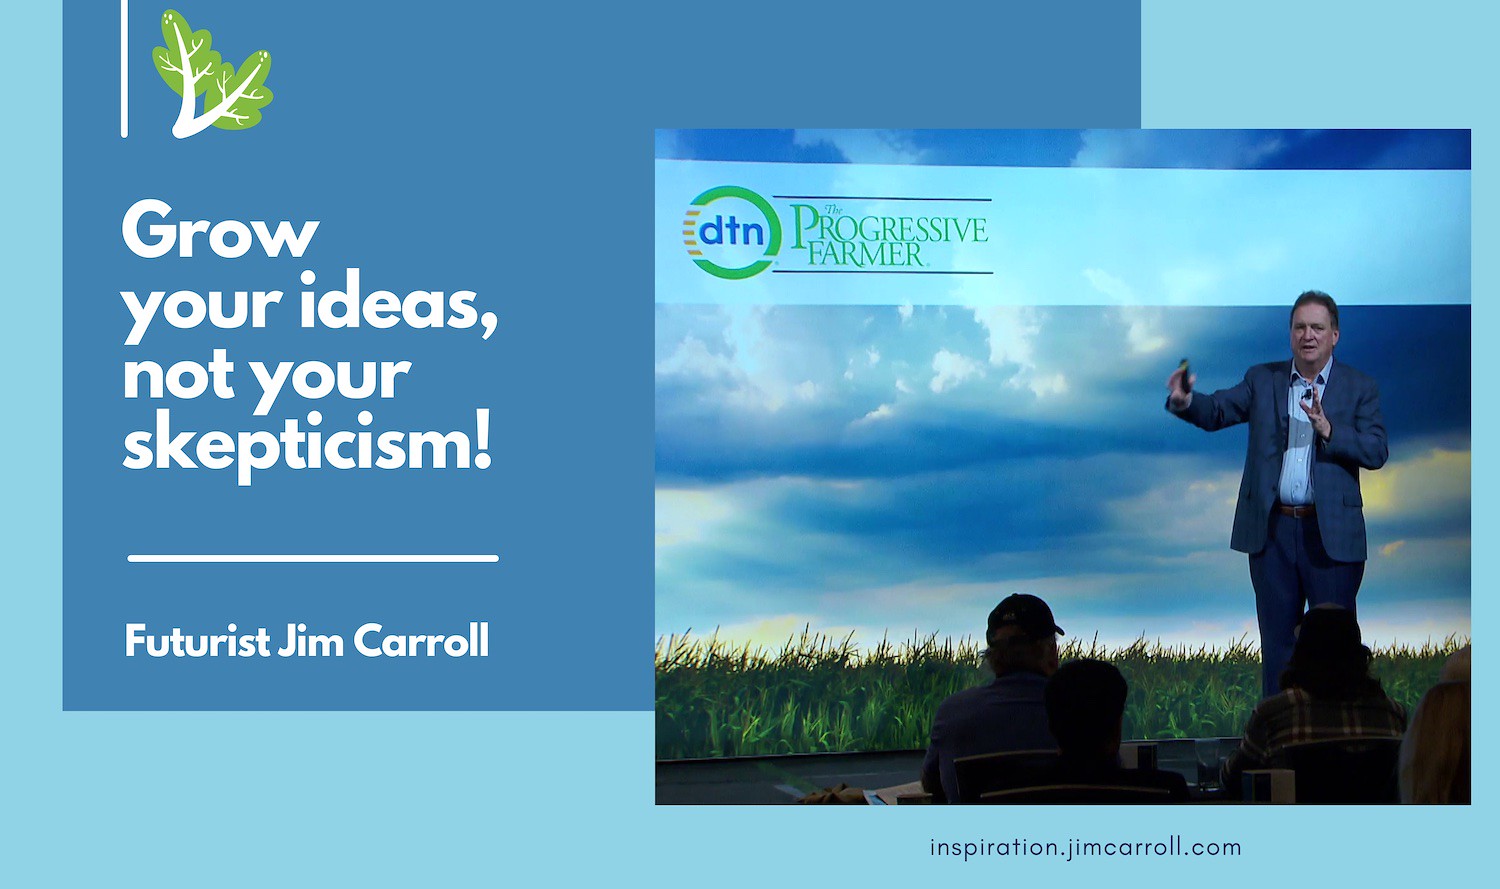 "Grow your ideas, not your skepticism!" - Futurist Jim Carroll